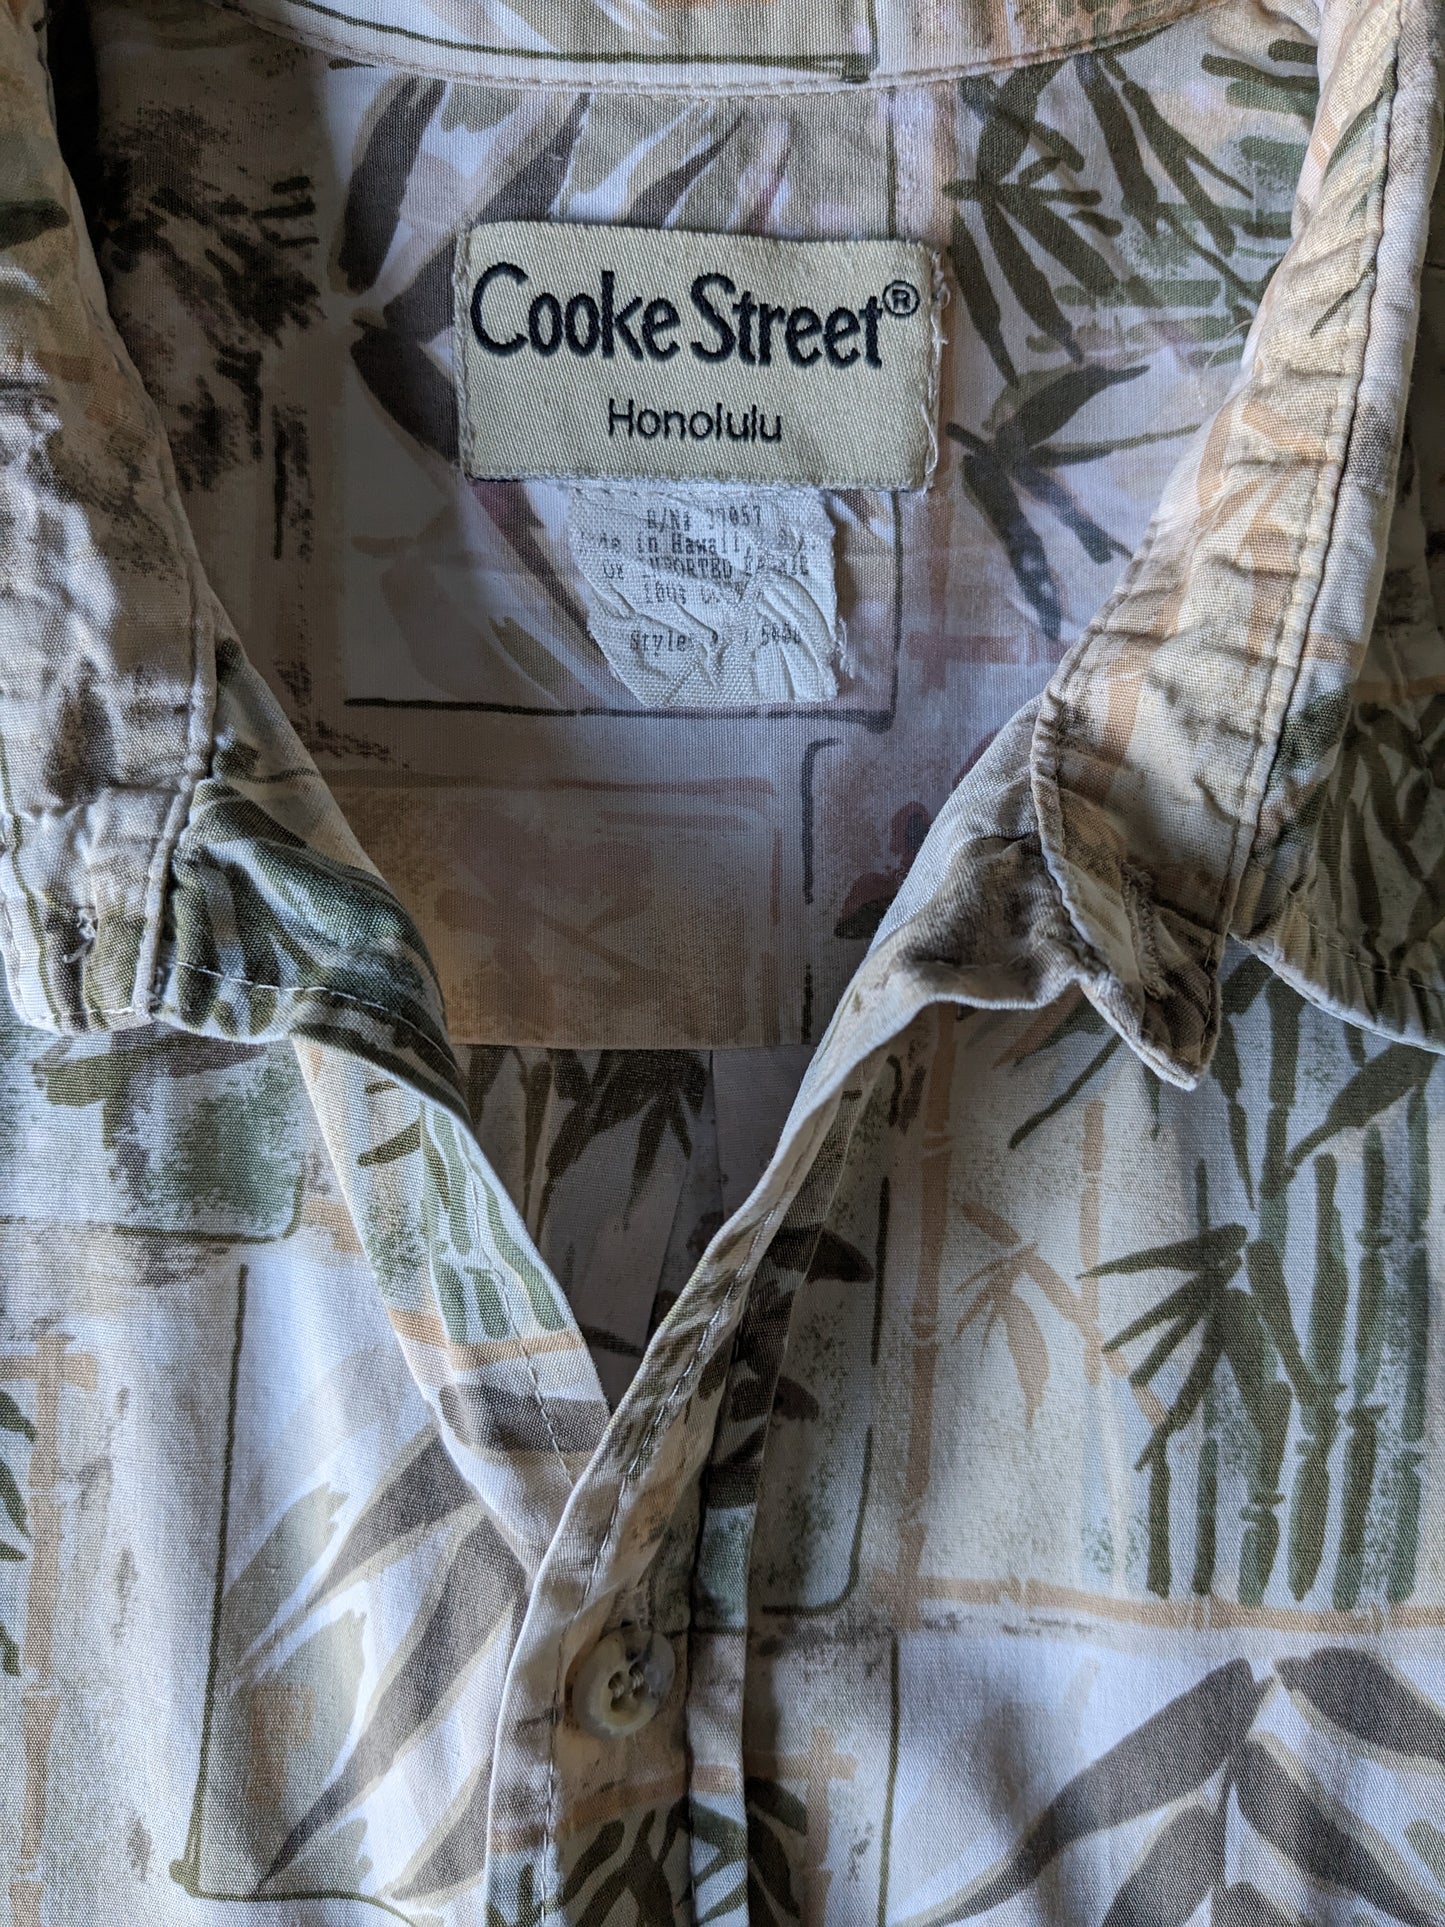 Cooke Street Honolulu Hawaii Shirt Sleeve. Impression beige verte. Taille xxl / 2xl.